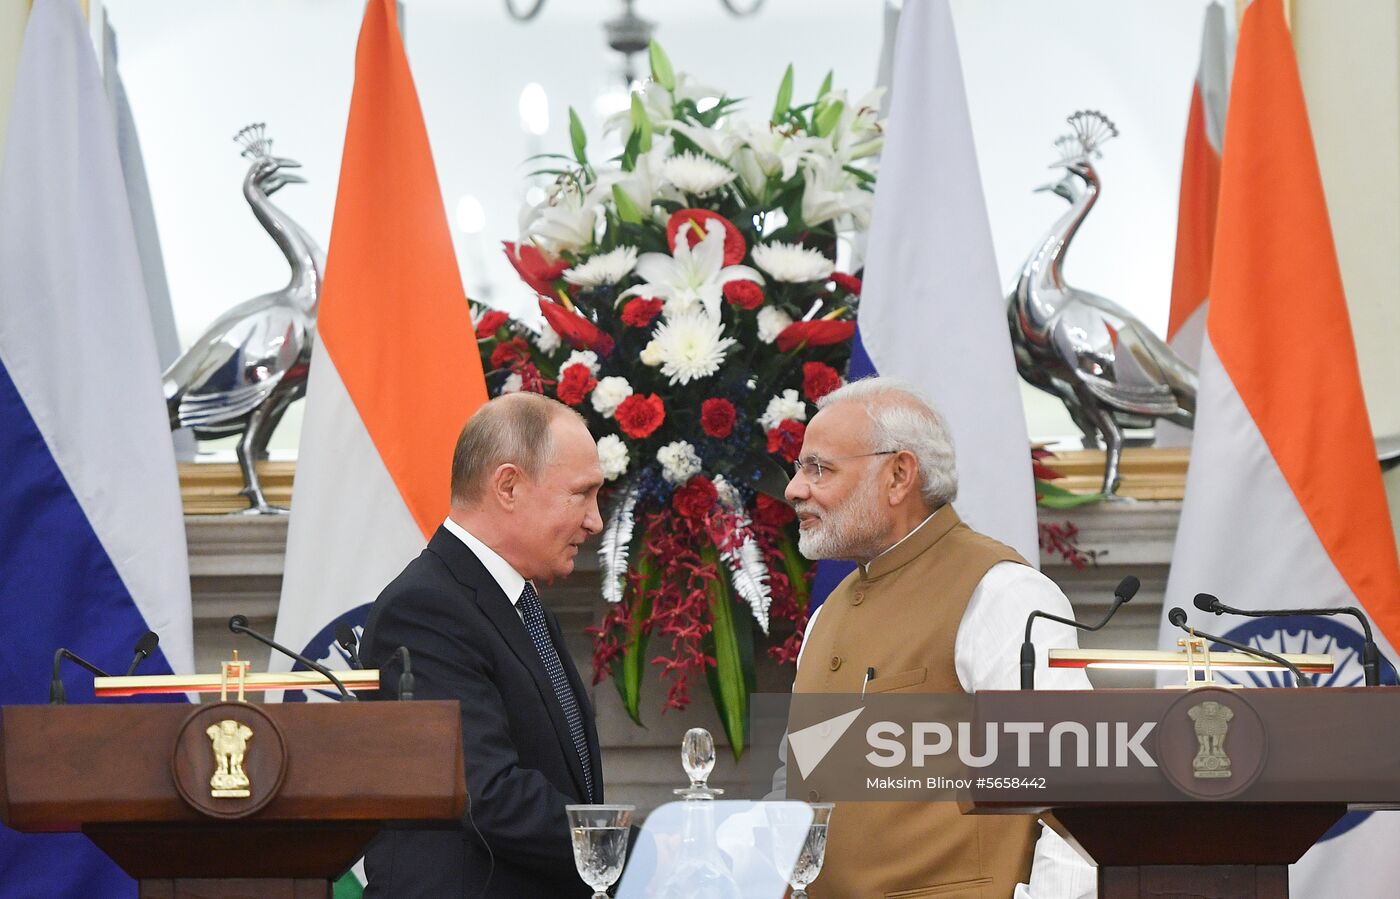 India Russia